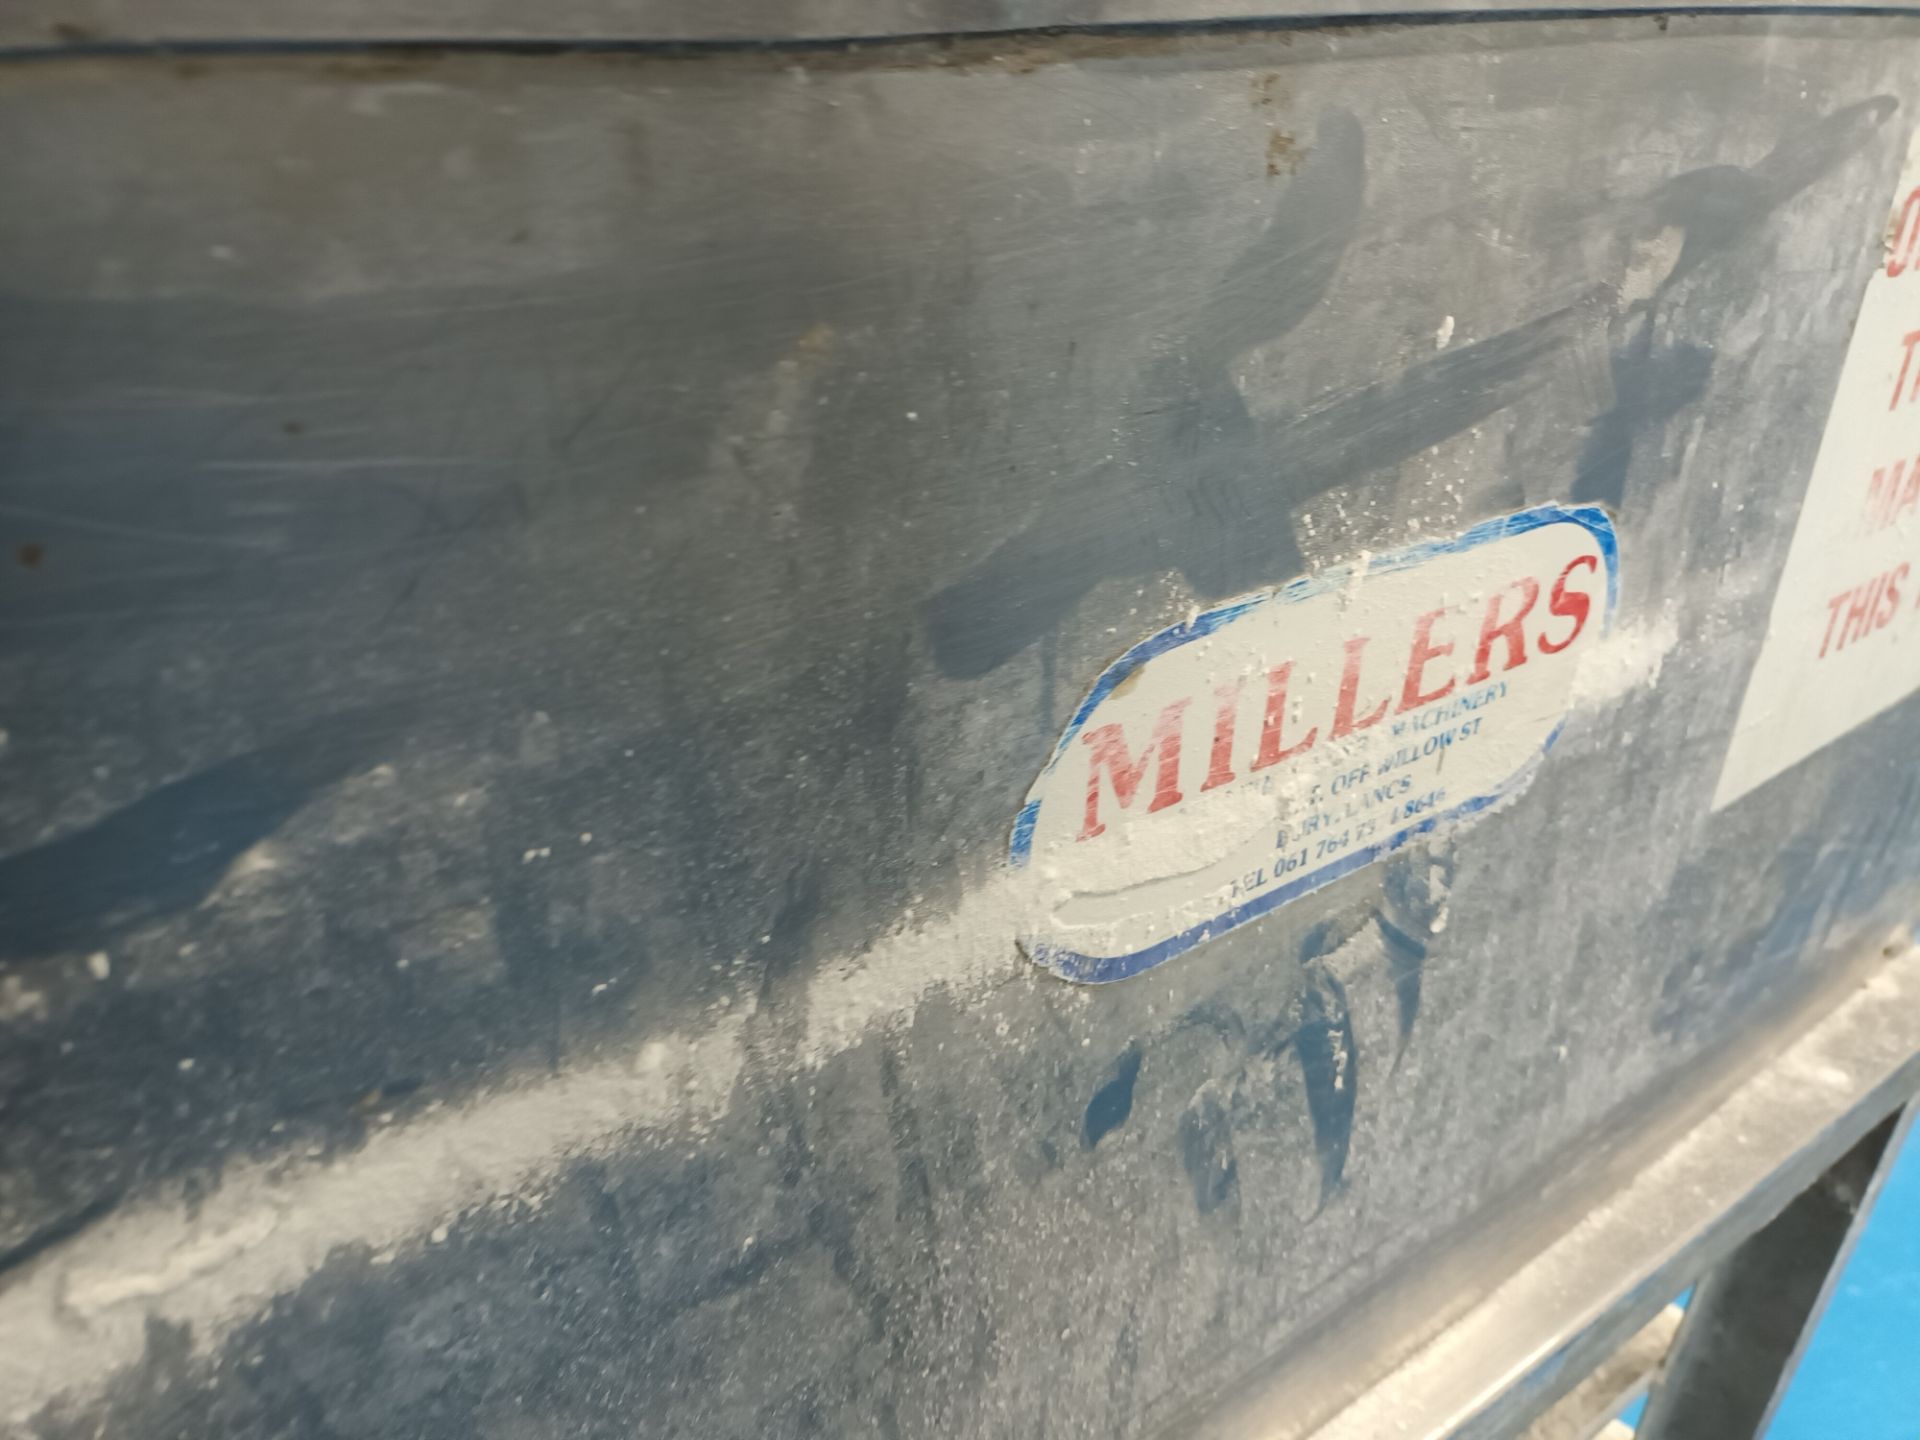 Millers bread moulder machine - Image 2 of 3